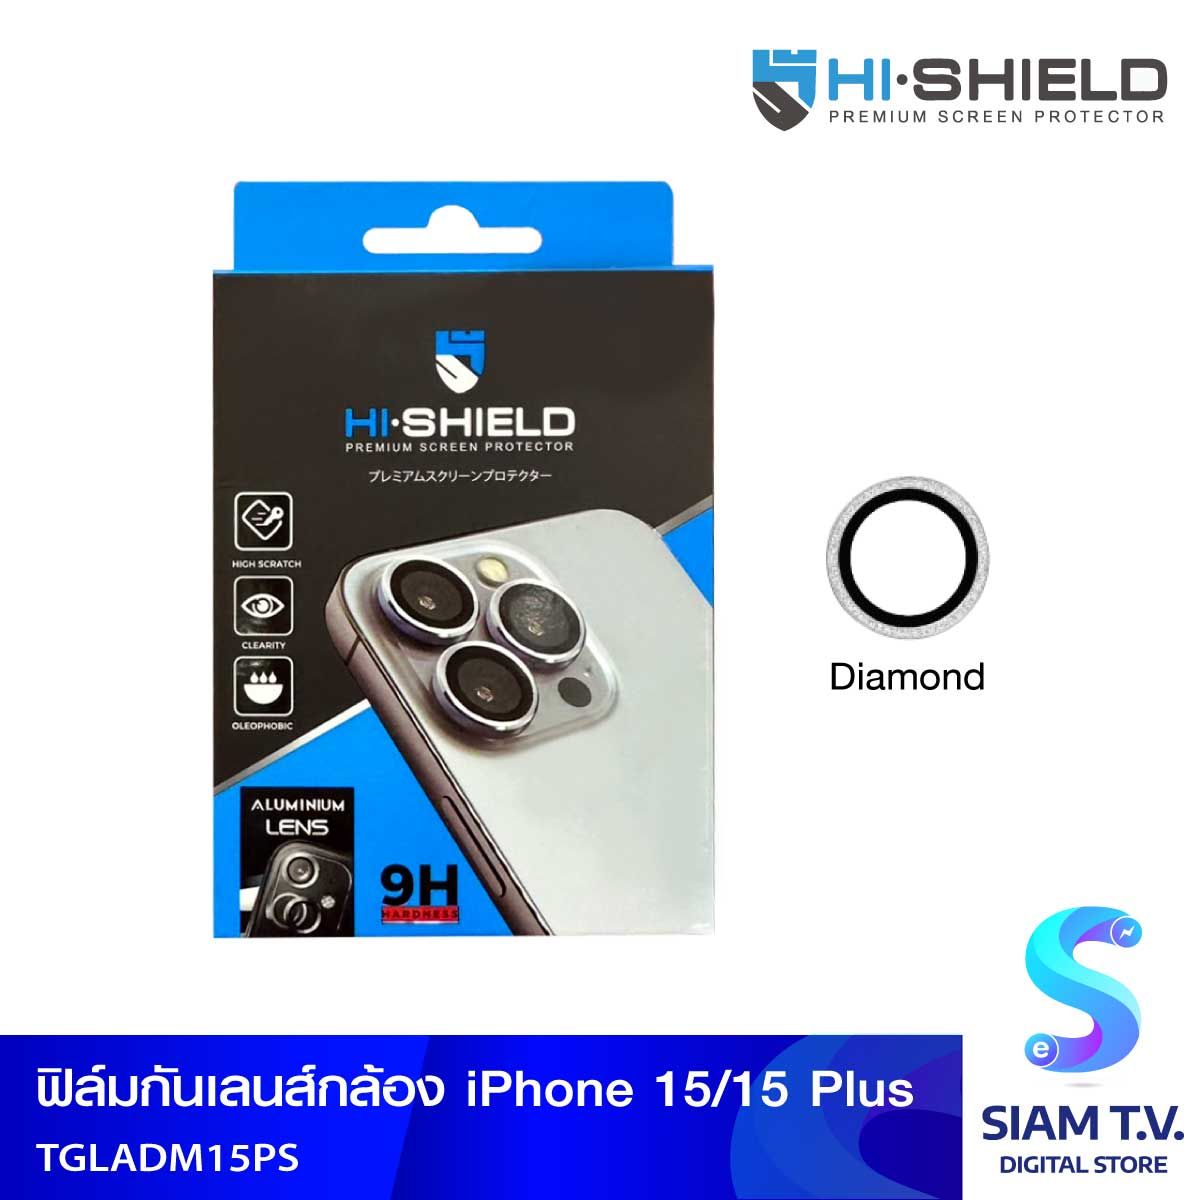 HISHIELD Aluminium Lens Diamond iPhone15/15Plus กระจกนิรภัยดีไซน์แบบติดแยกเลนส์